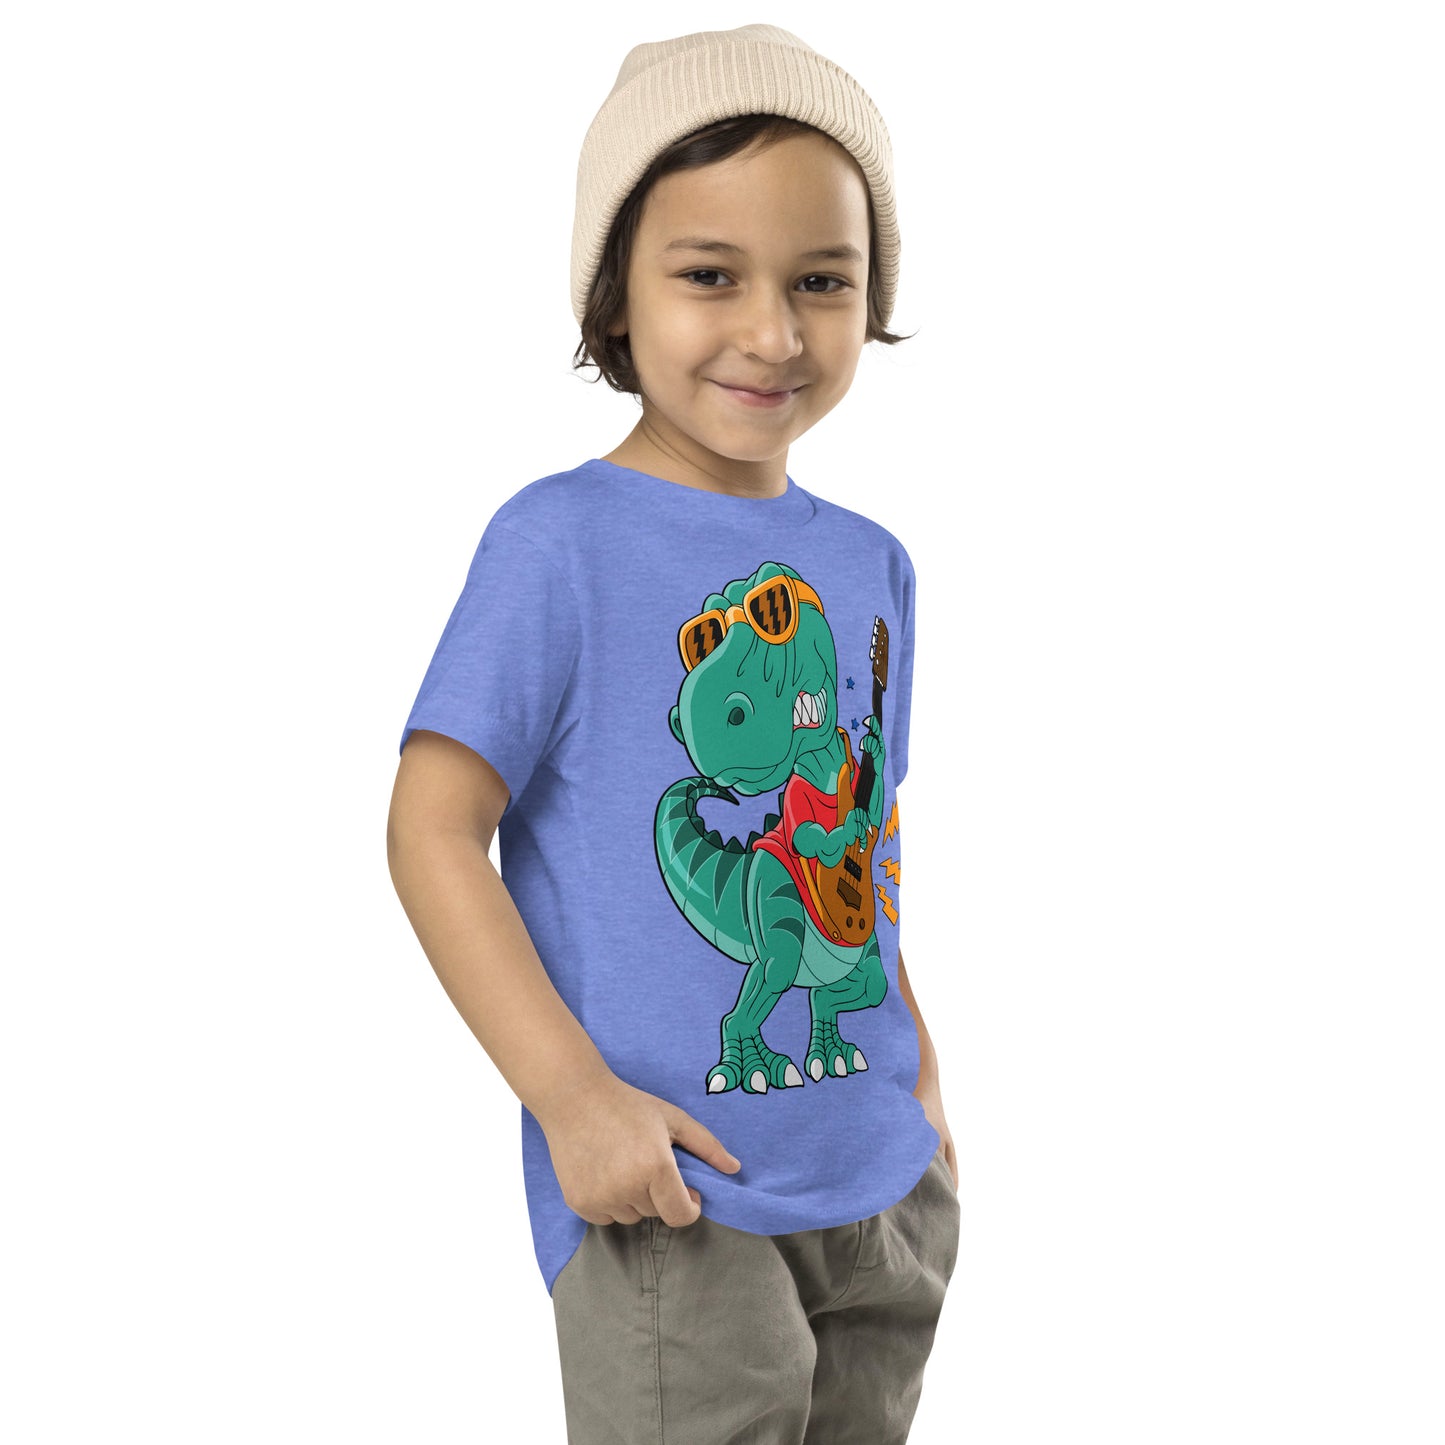 Cool Dinosaur Rock Star T-shirt, No. 0258